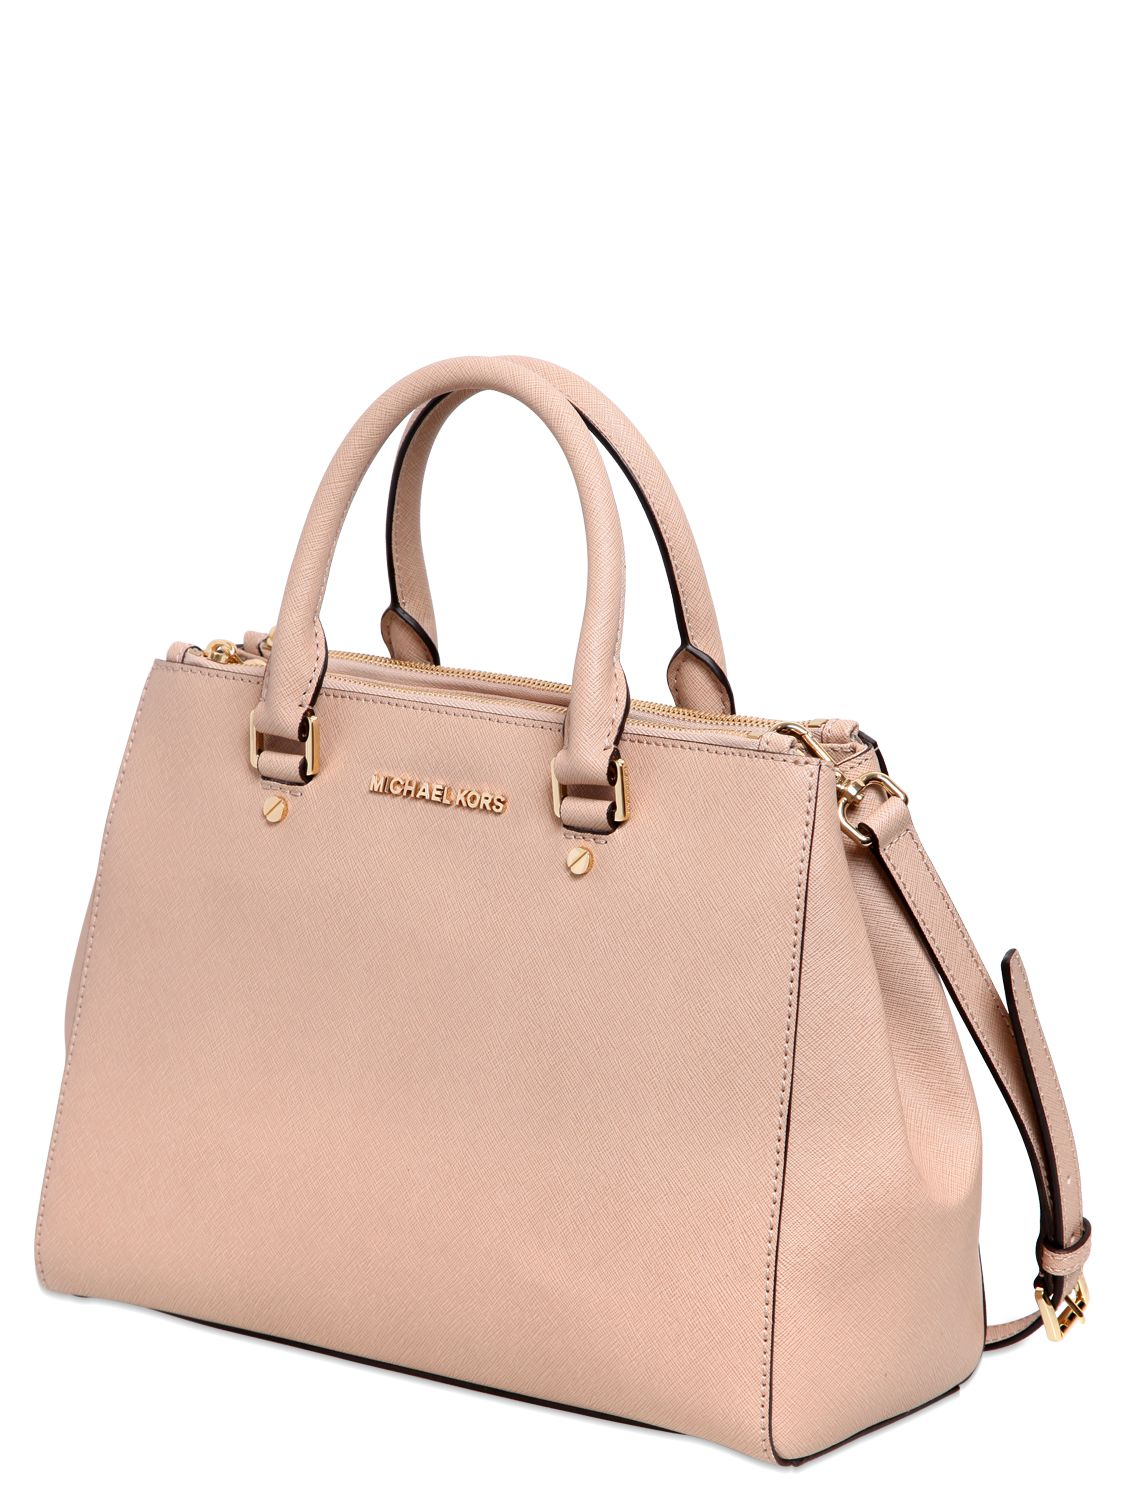 Michael Kors Jet Set Large Chain Tote Handbag, Electric Pink Multi :  Clothing, Shoes & Jewelry - Amazon.com